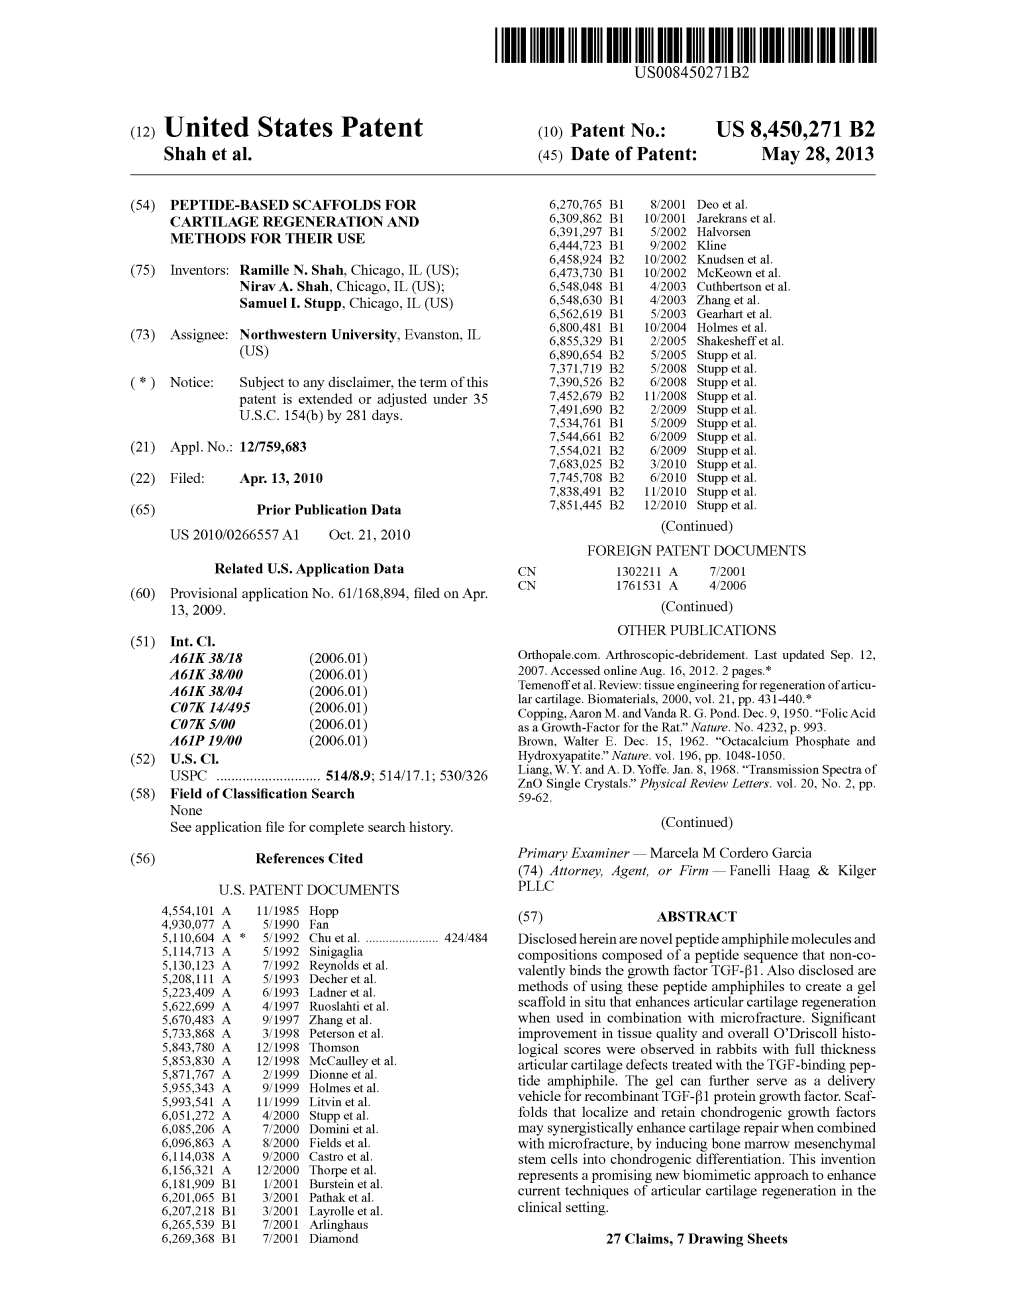 (12) United States Patent (10) Patent N0.: US 8,450,271 B2 Shah Et Al